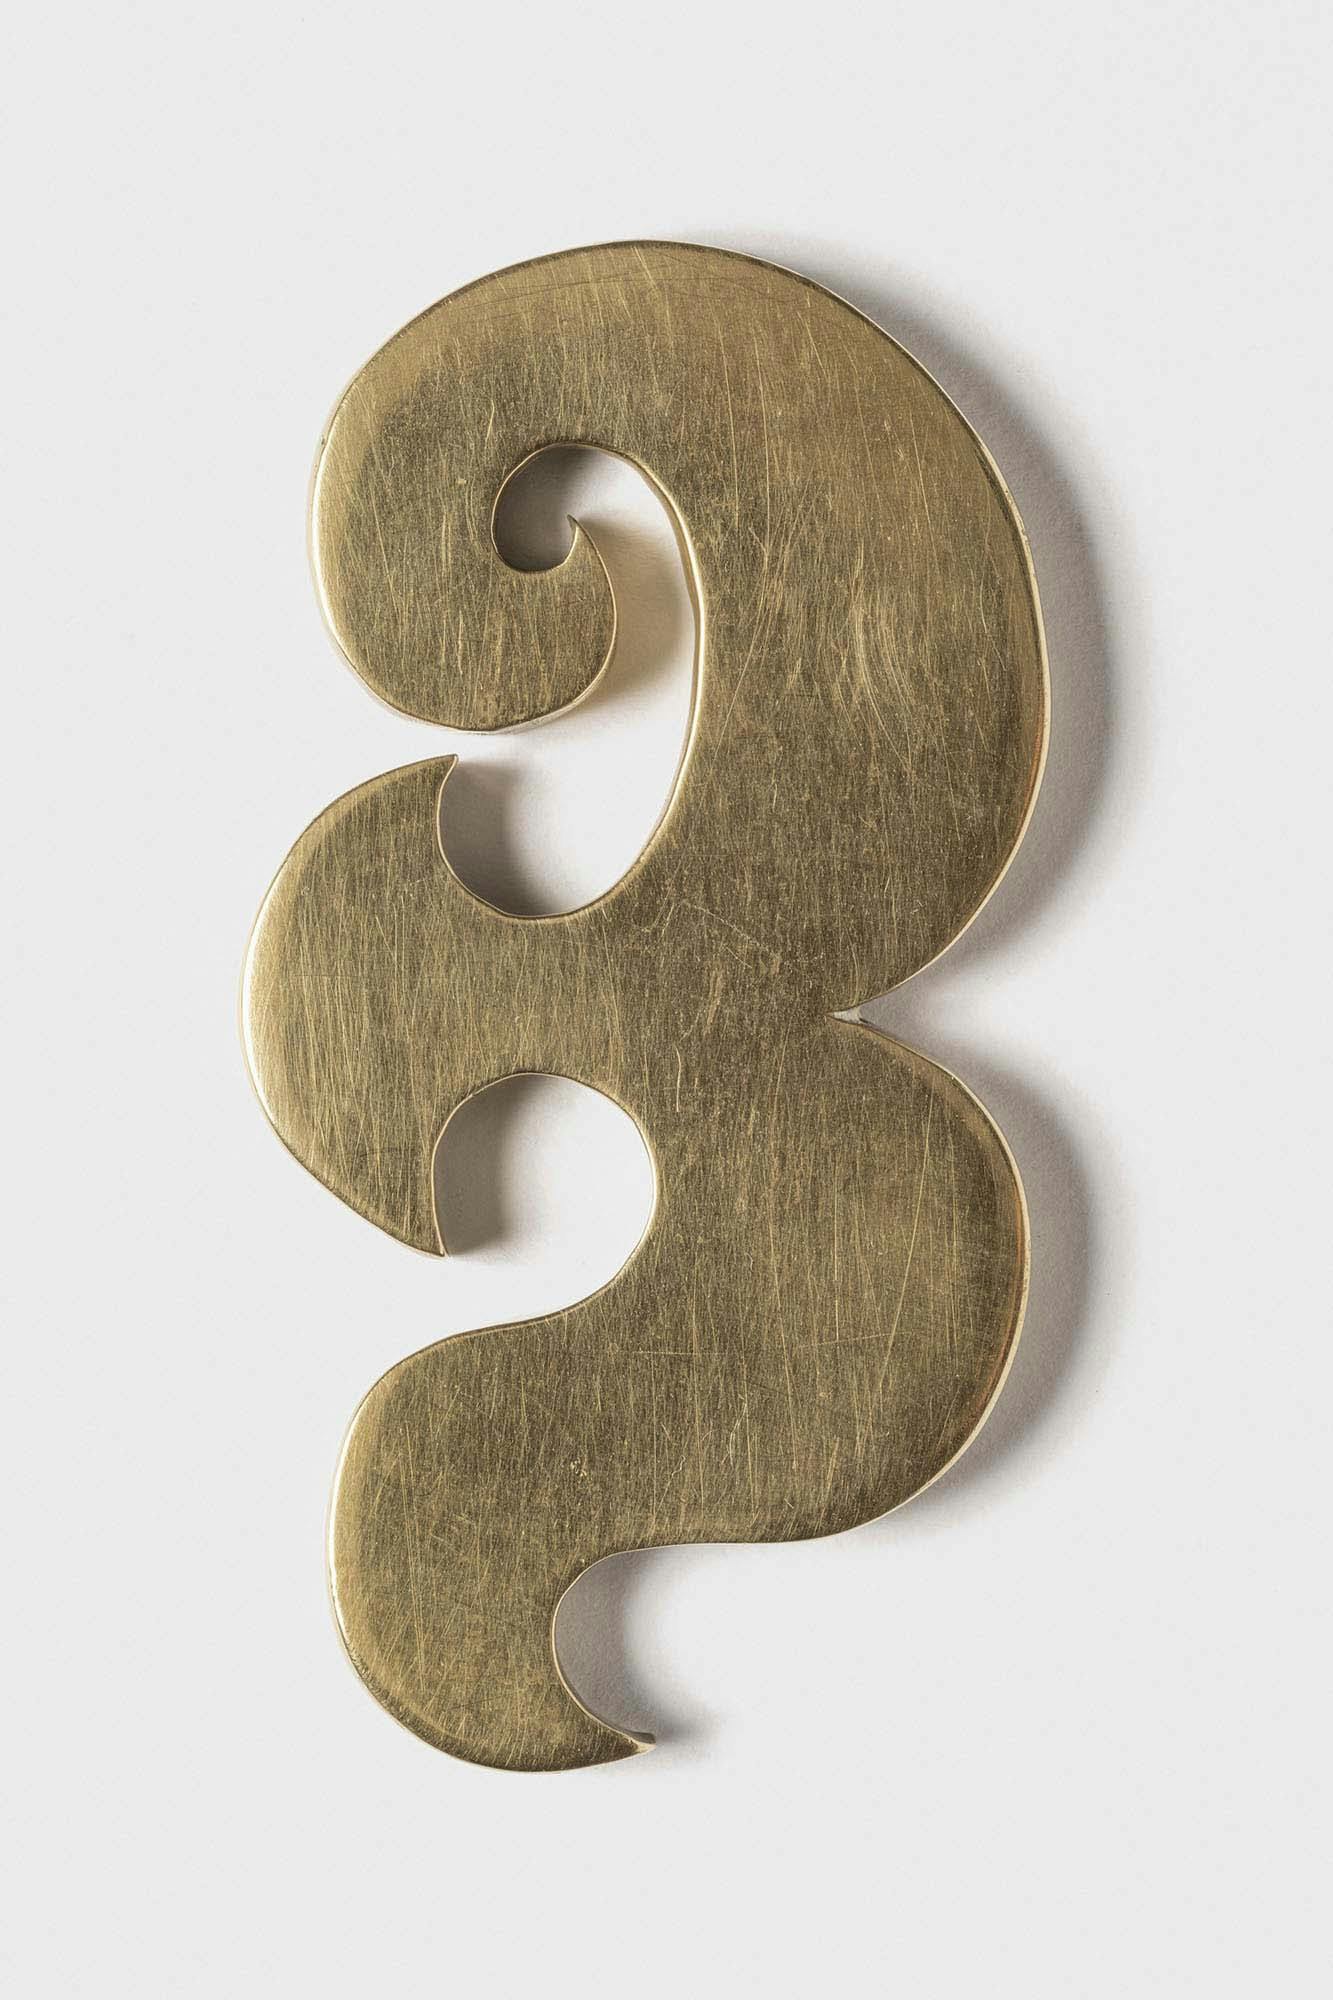 Brass #80
c. 1952
Hand-cut brass
3 5/8 x 2 x 1/4 in. (9.2 x 5.1 cm)
 – The Richard Pousette-Dart Foundation